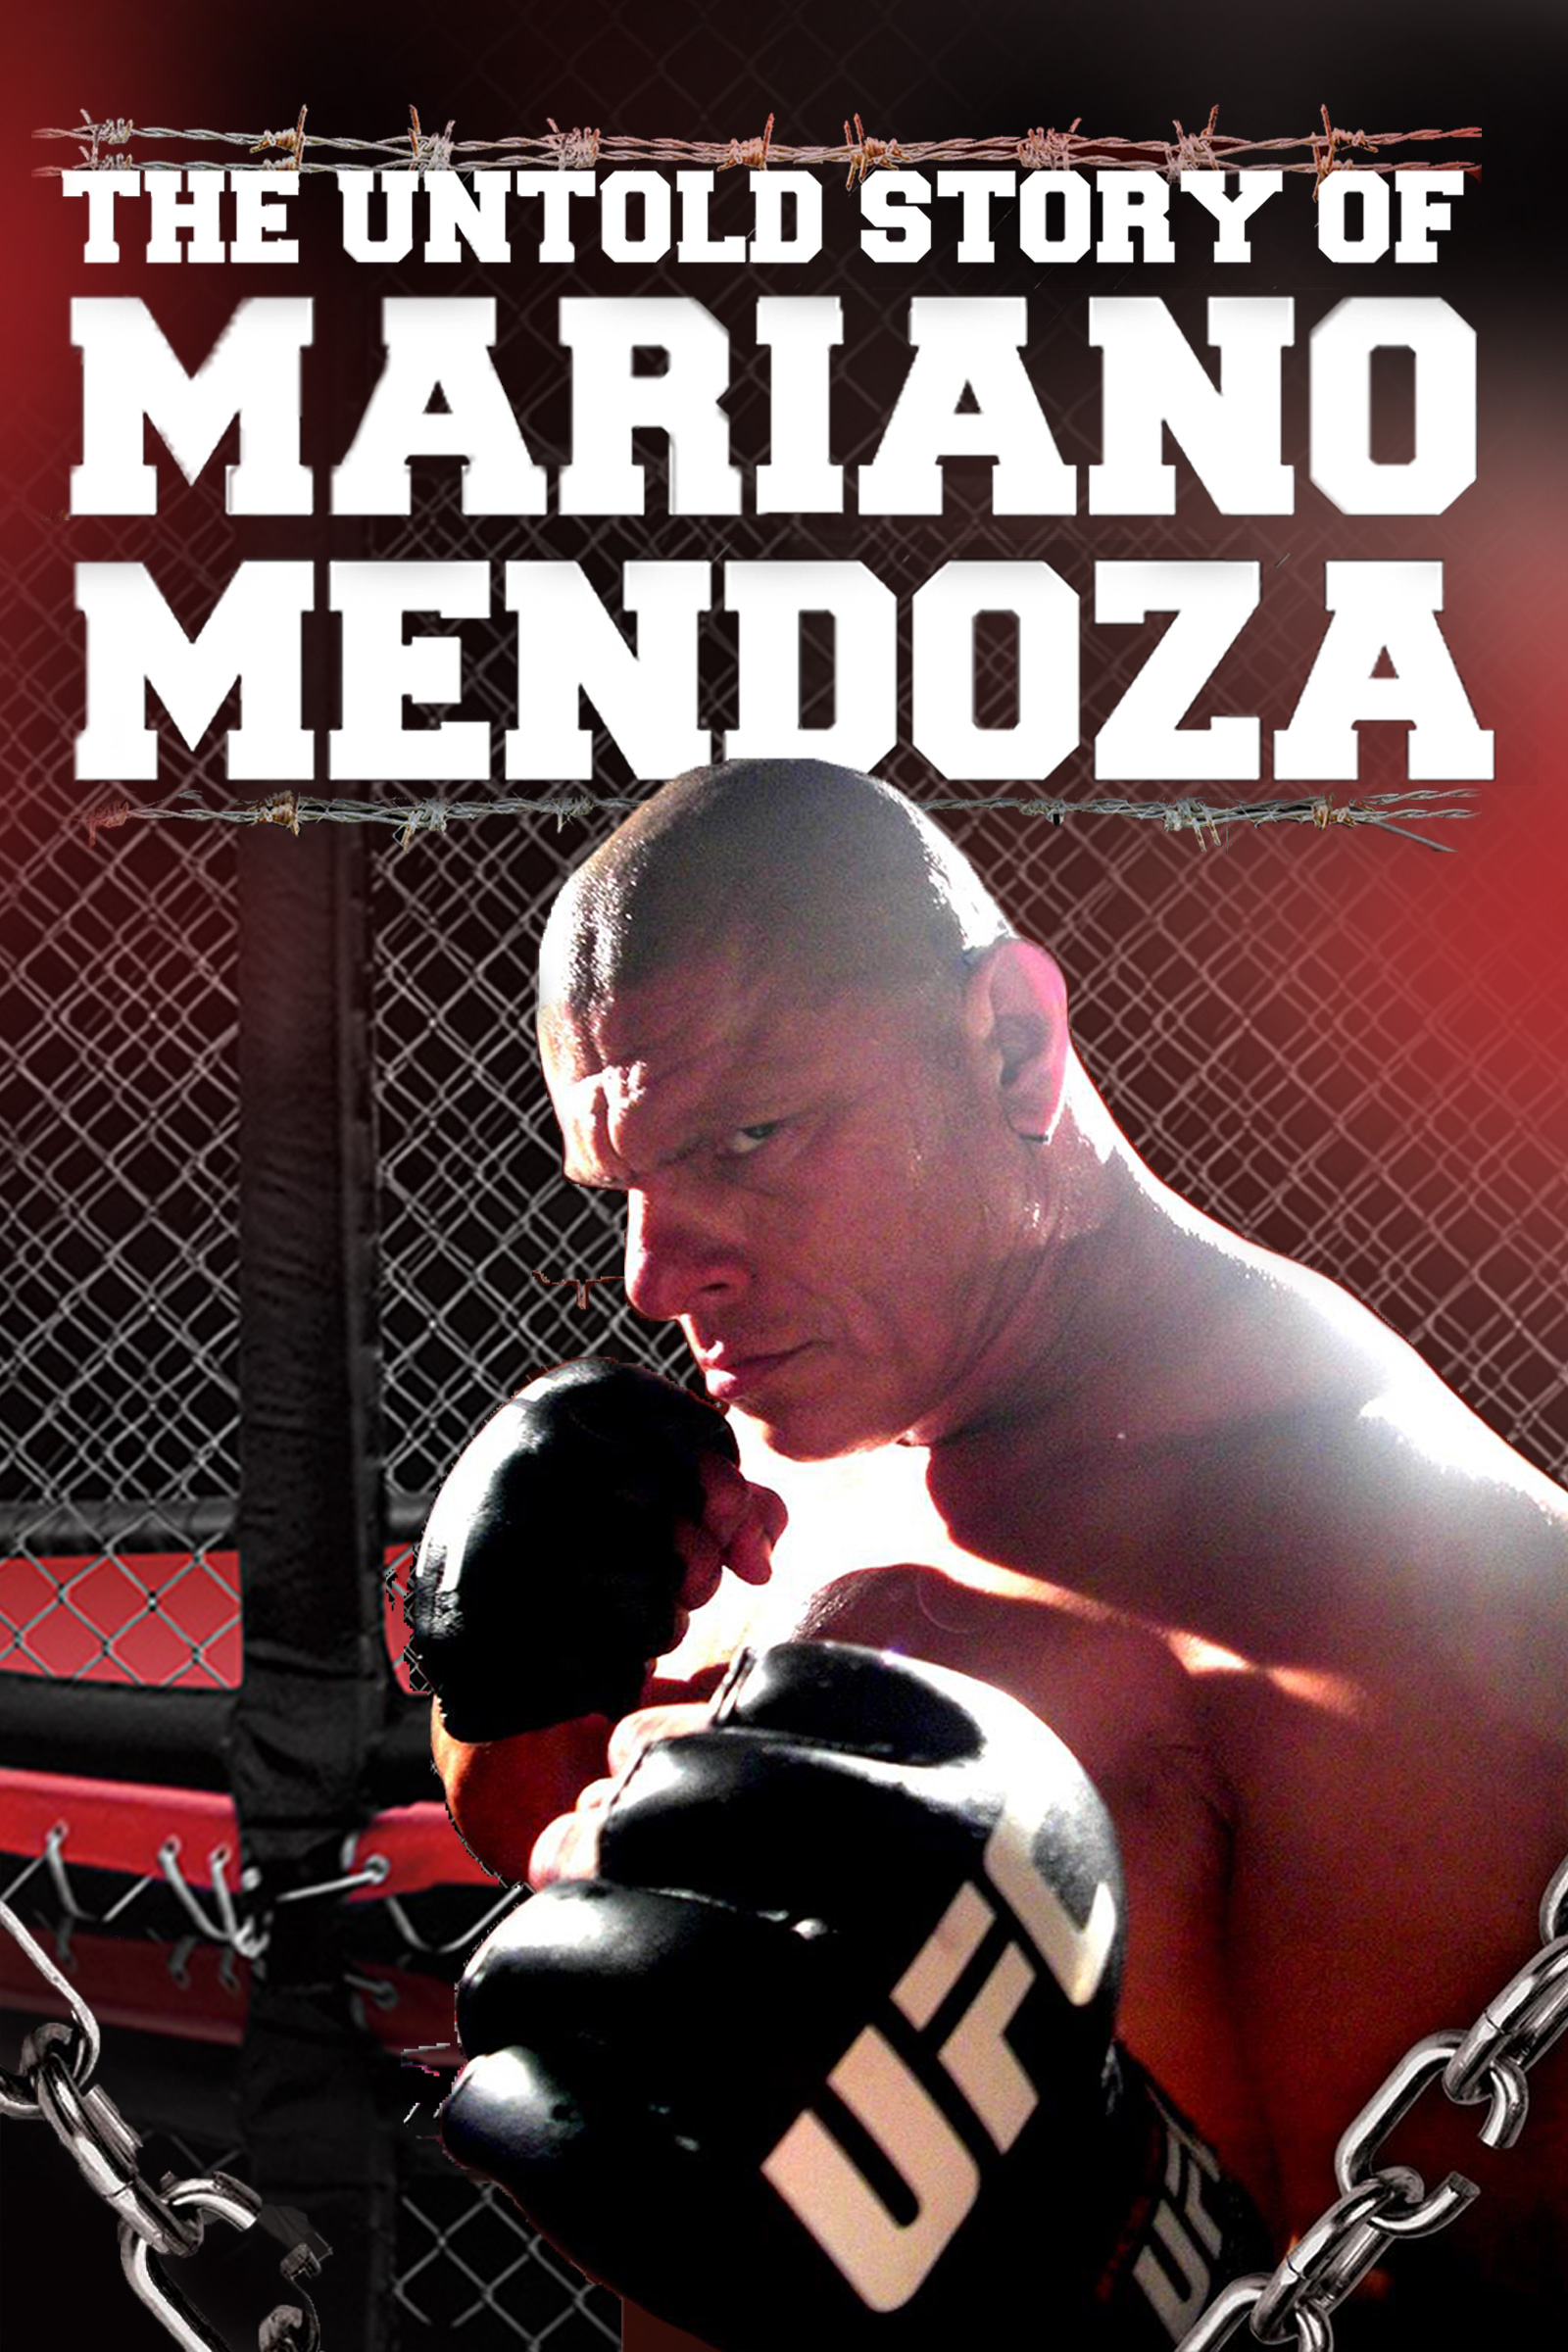 Where to stream The Untold Story Of Mariano Mendoza